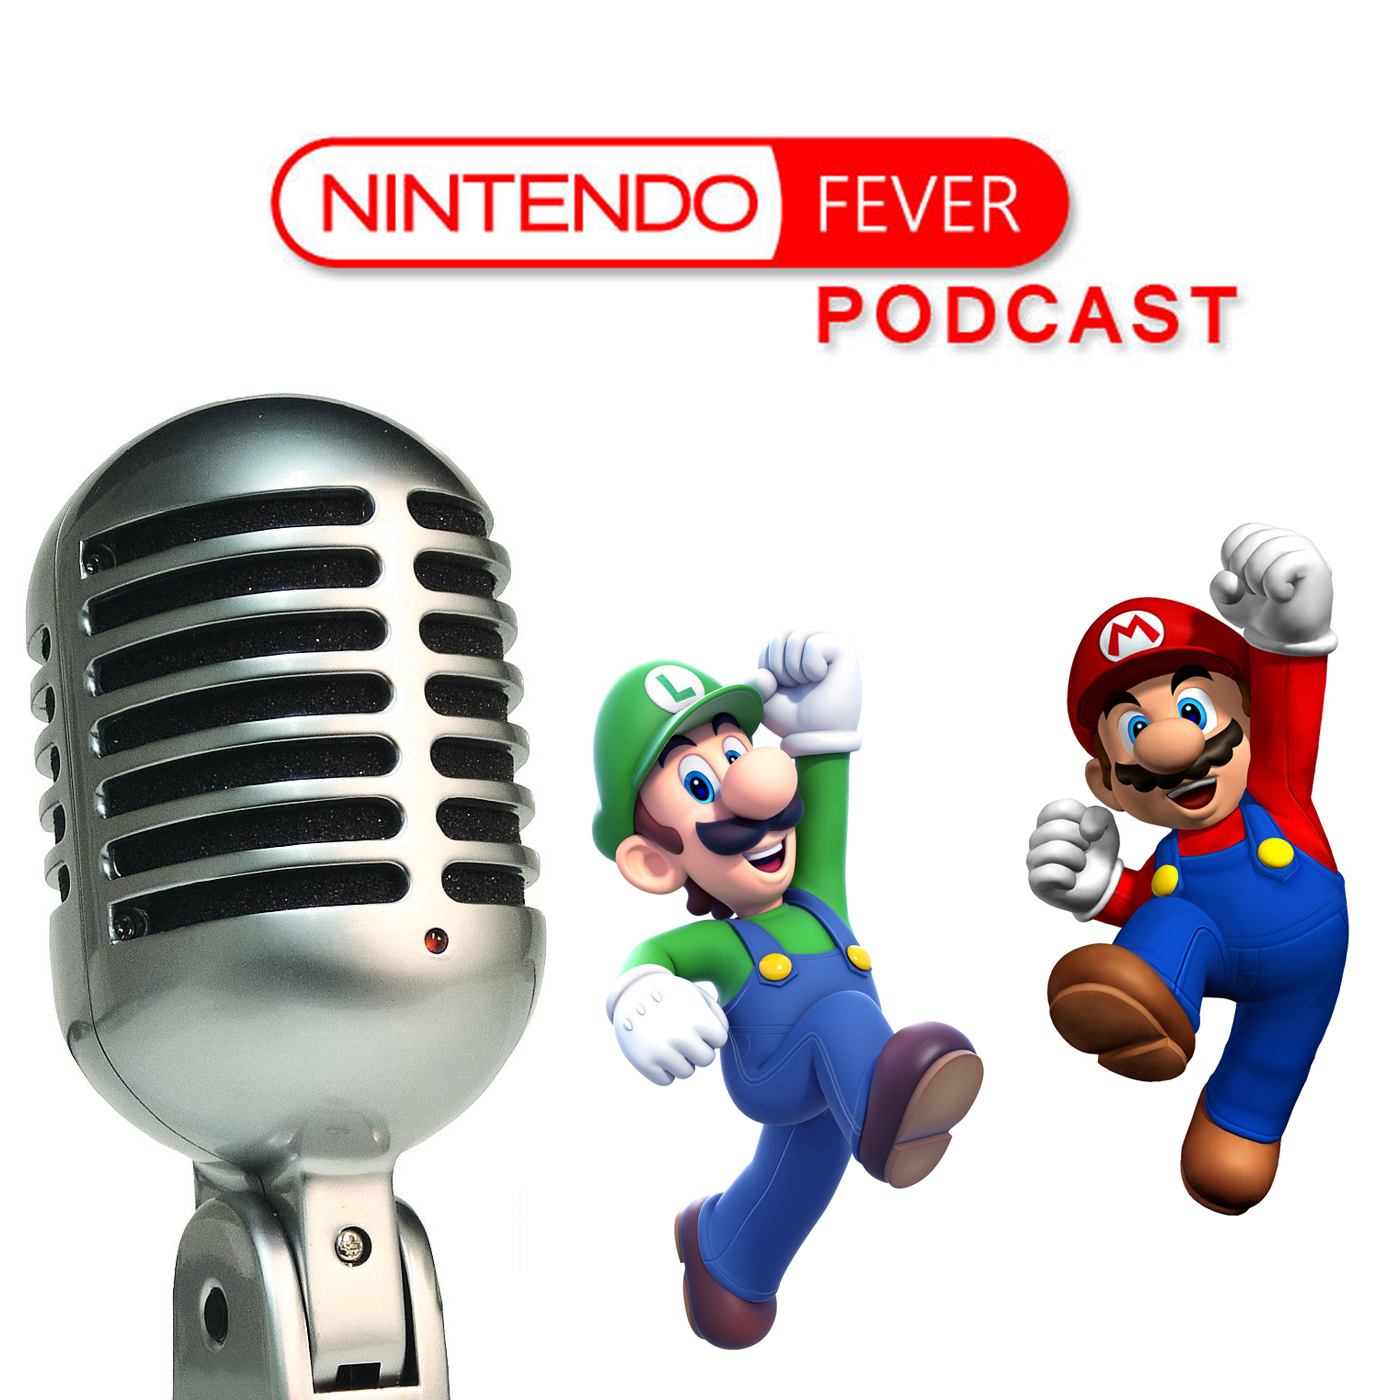 NintendoFever Podcast Episode 100: All the Games Ever